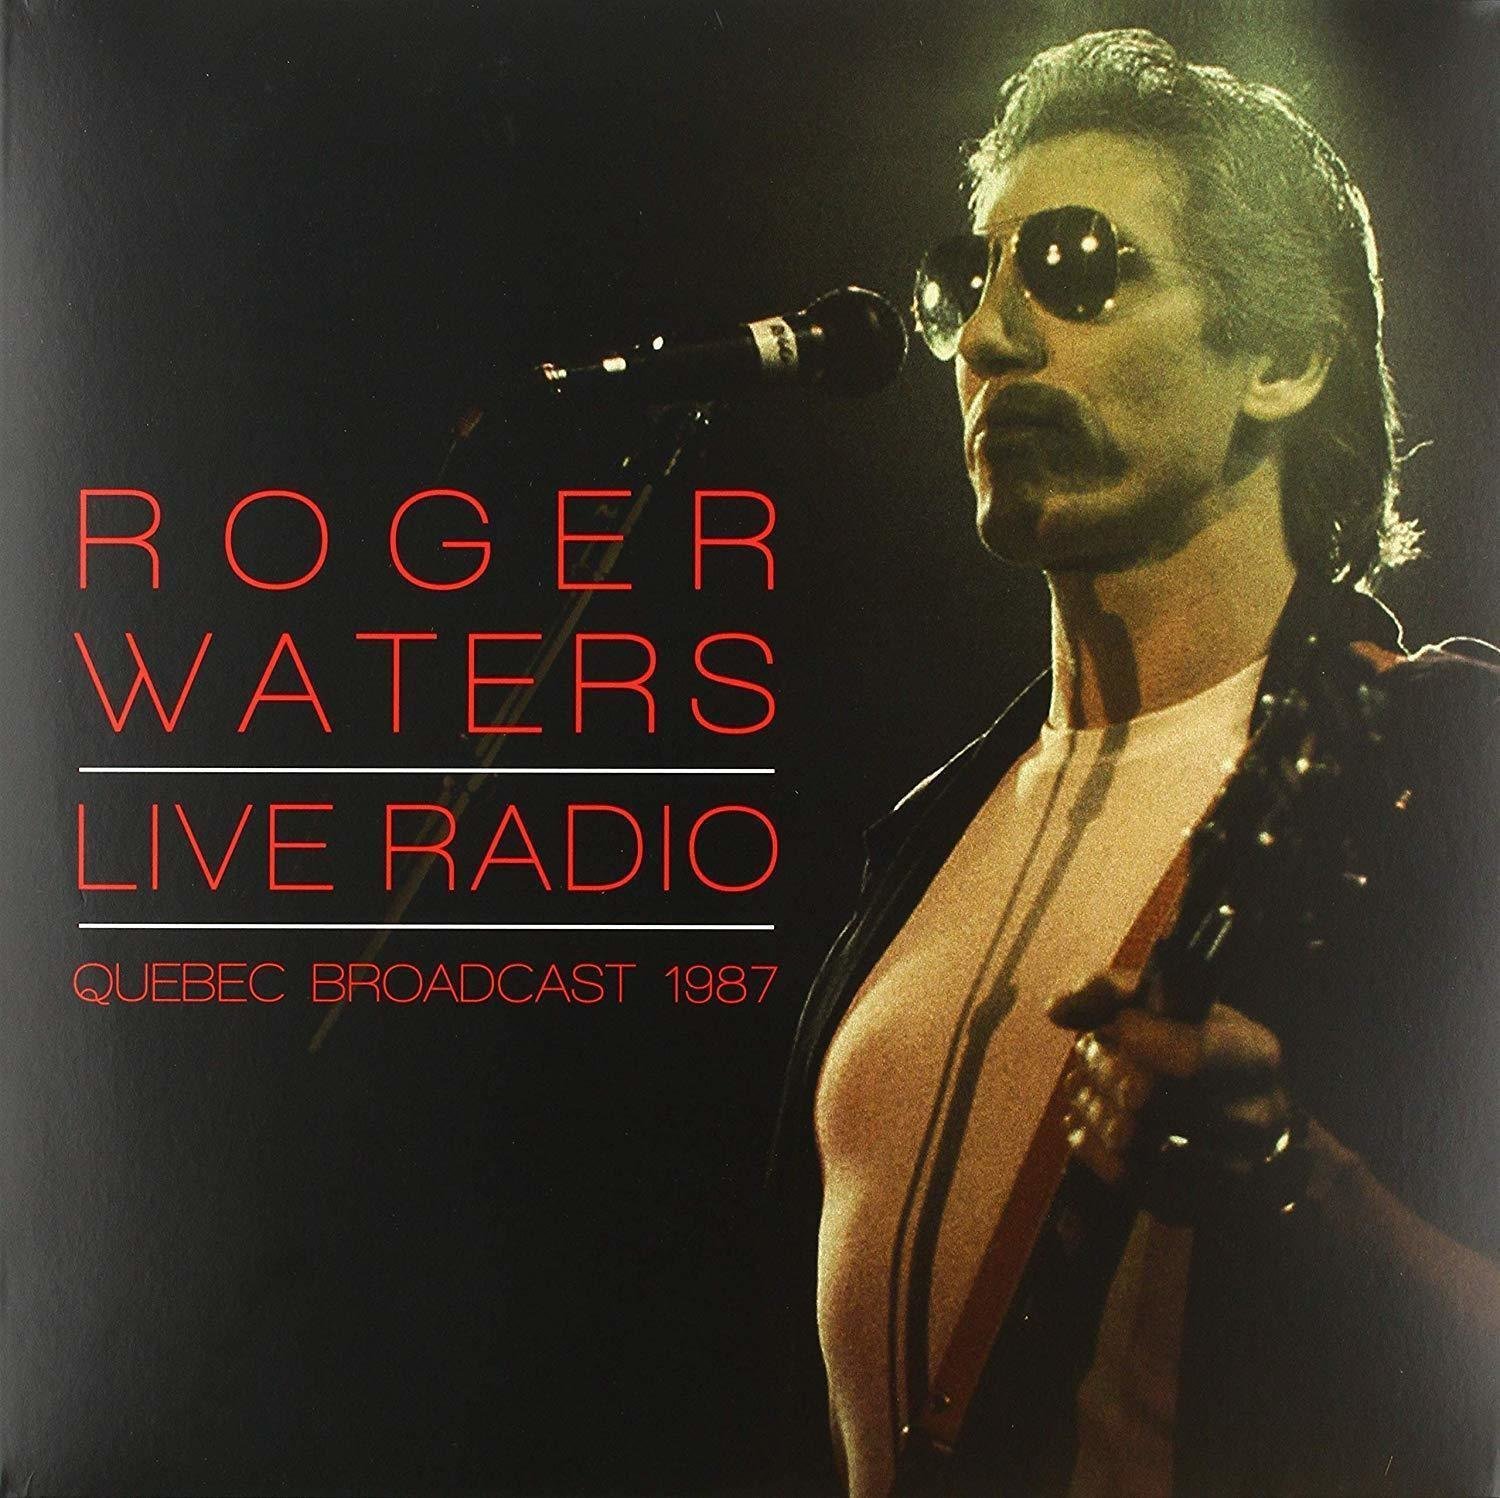 Vinylskiva Roger Waters - Live Radio - Quebec Broadcast 1987 (2 LP)